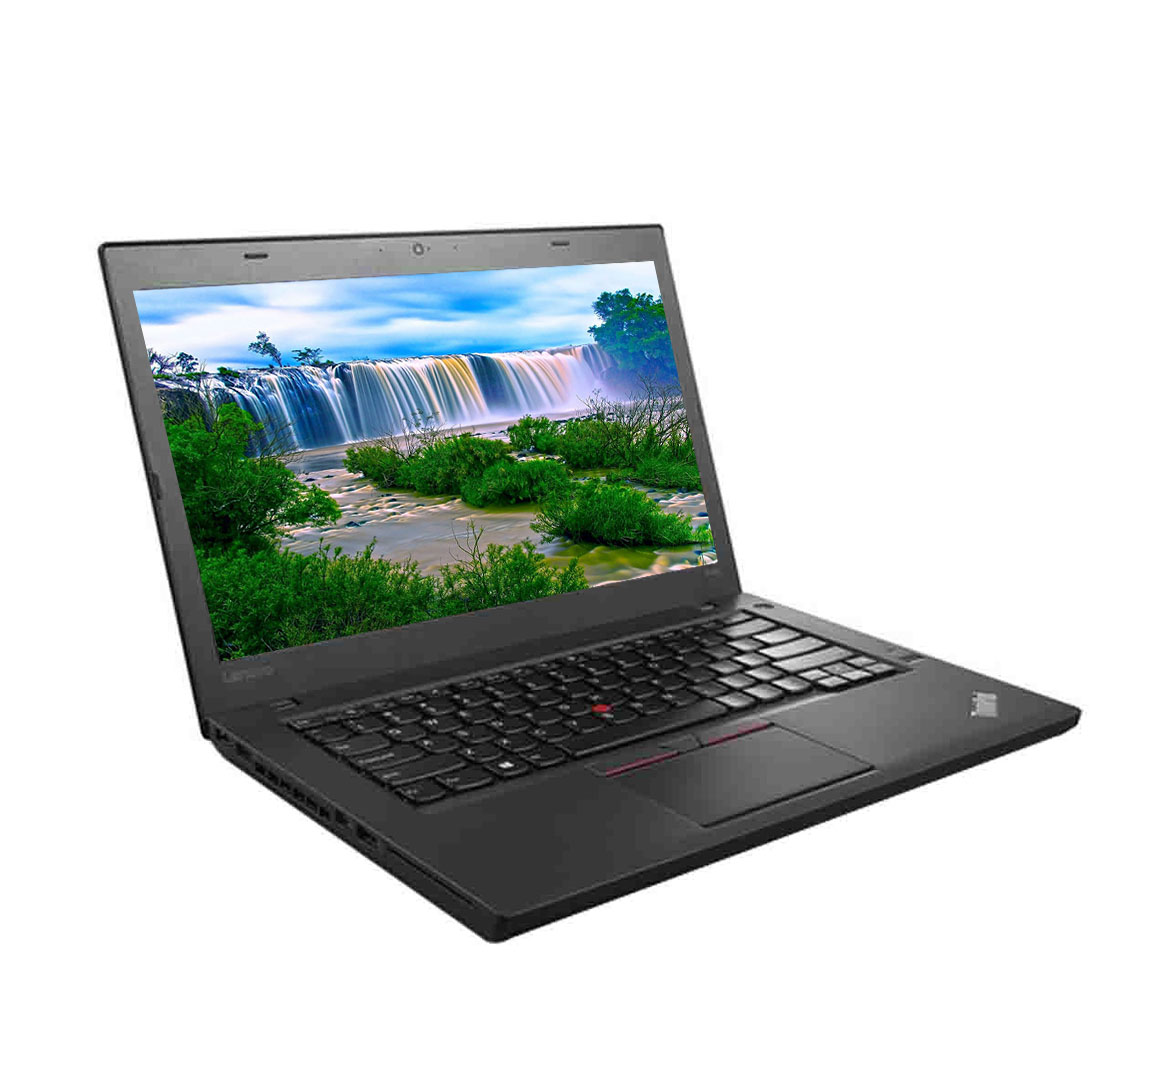 Lenovo ThinkPad T450s Business Laptop, Intel Core i5-5th Generation CPU, 8GB RAM, 256GB SSD, 14 inch Touchscreen, Windows 10 Pro